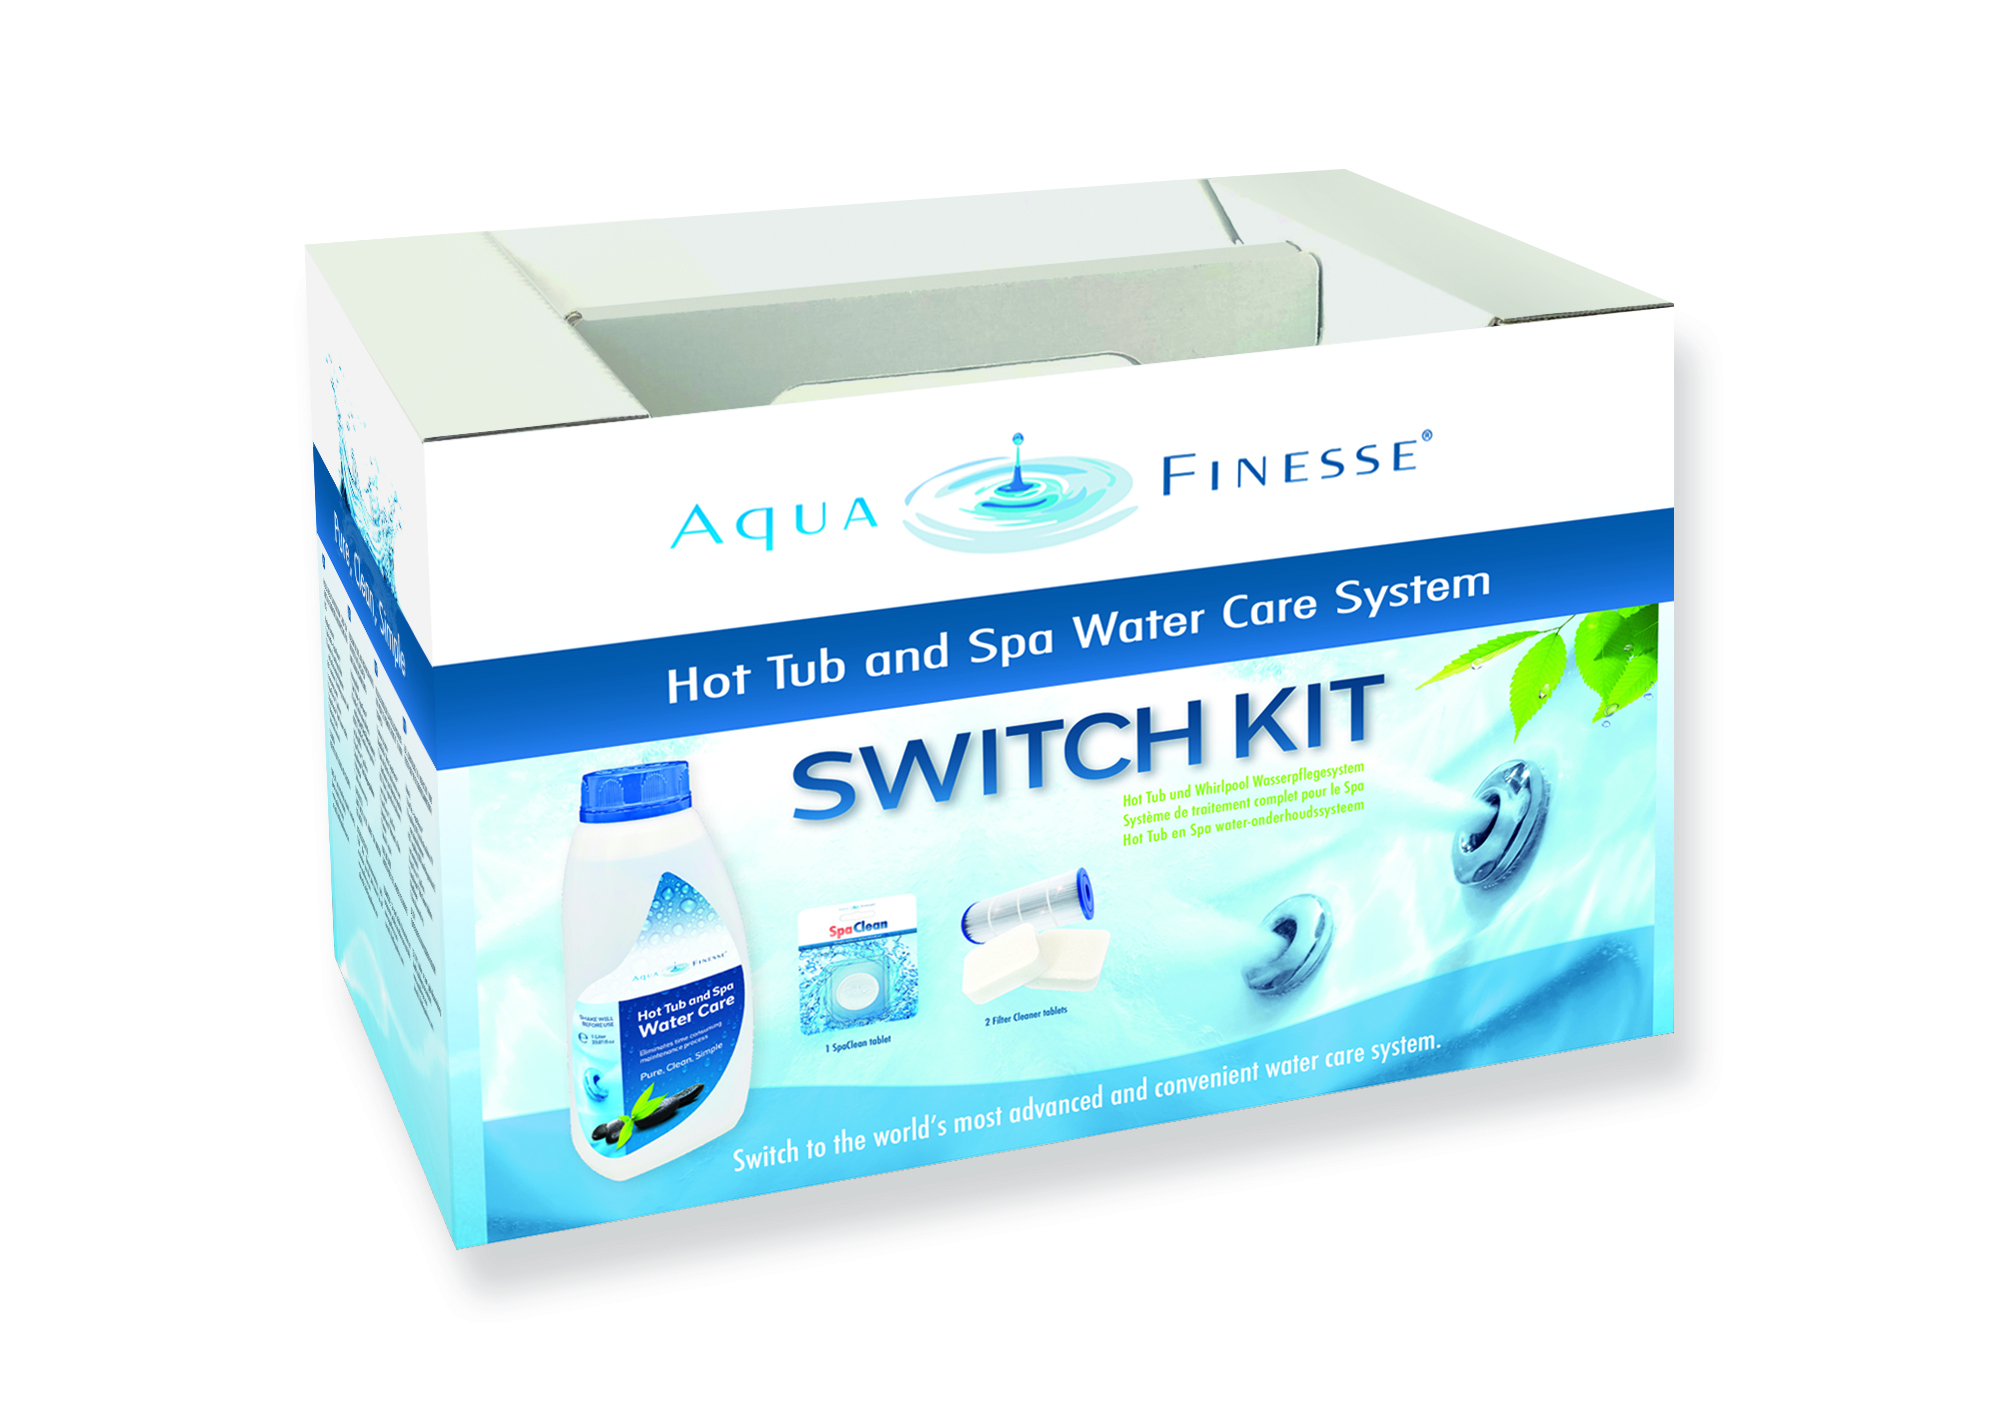 AquaFinesse switch kit